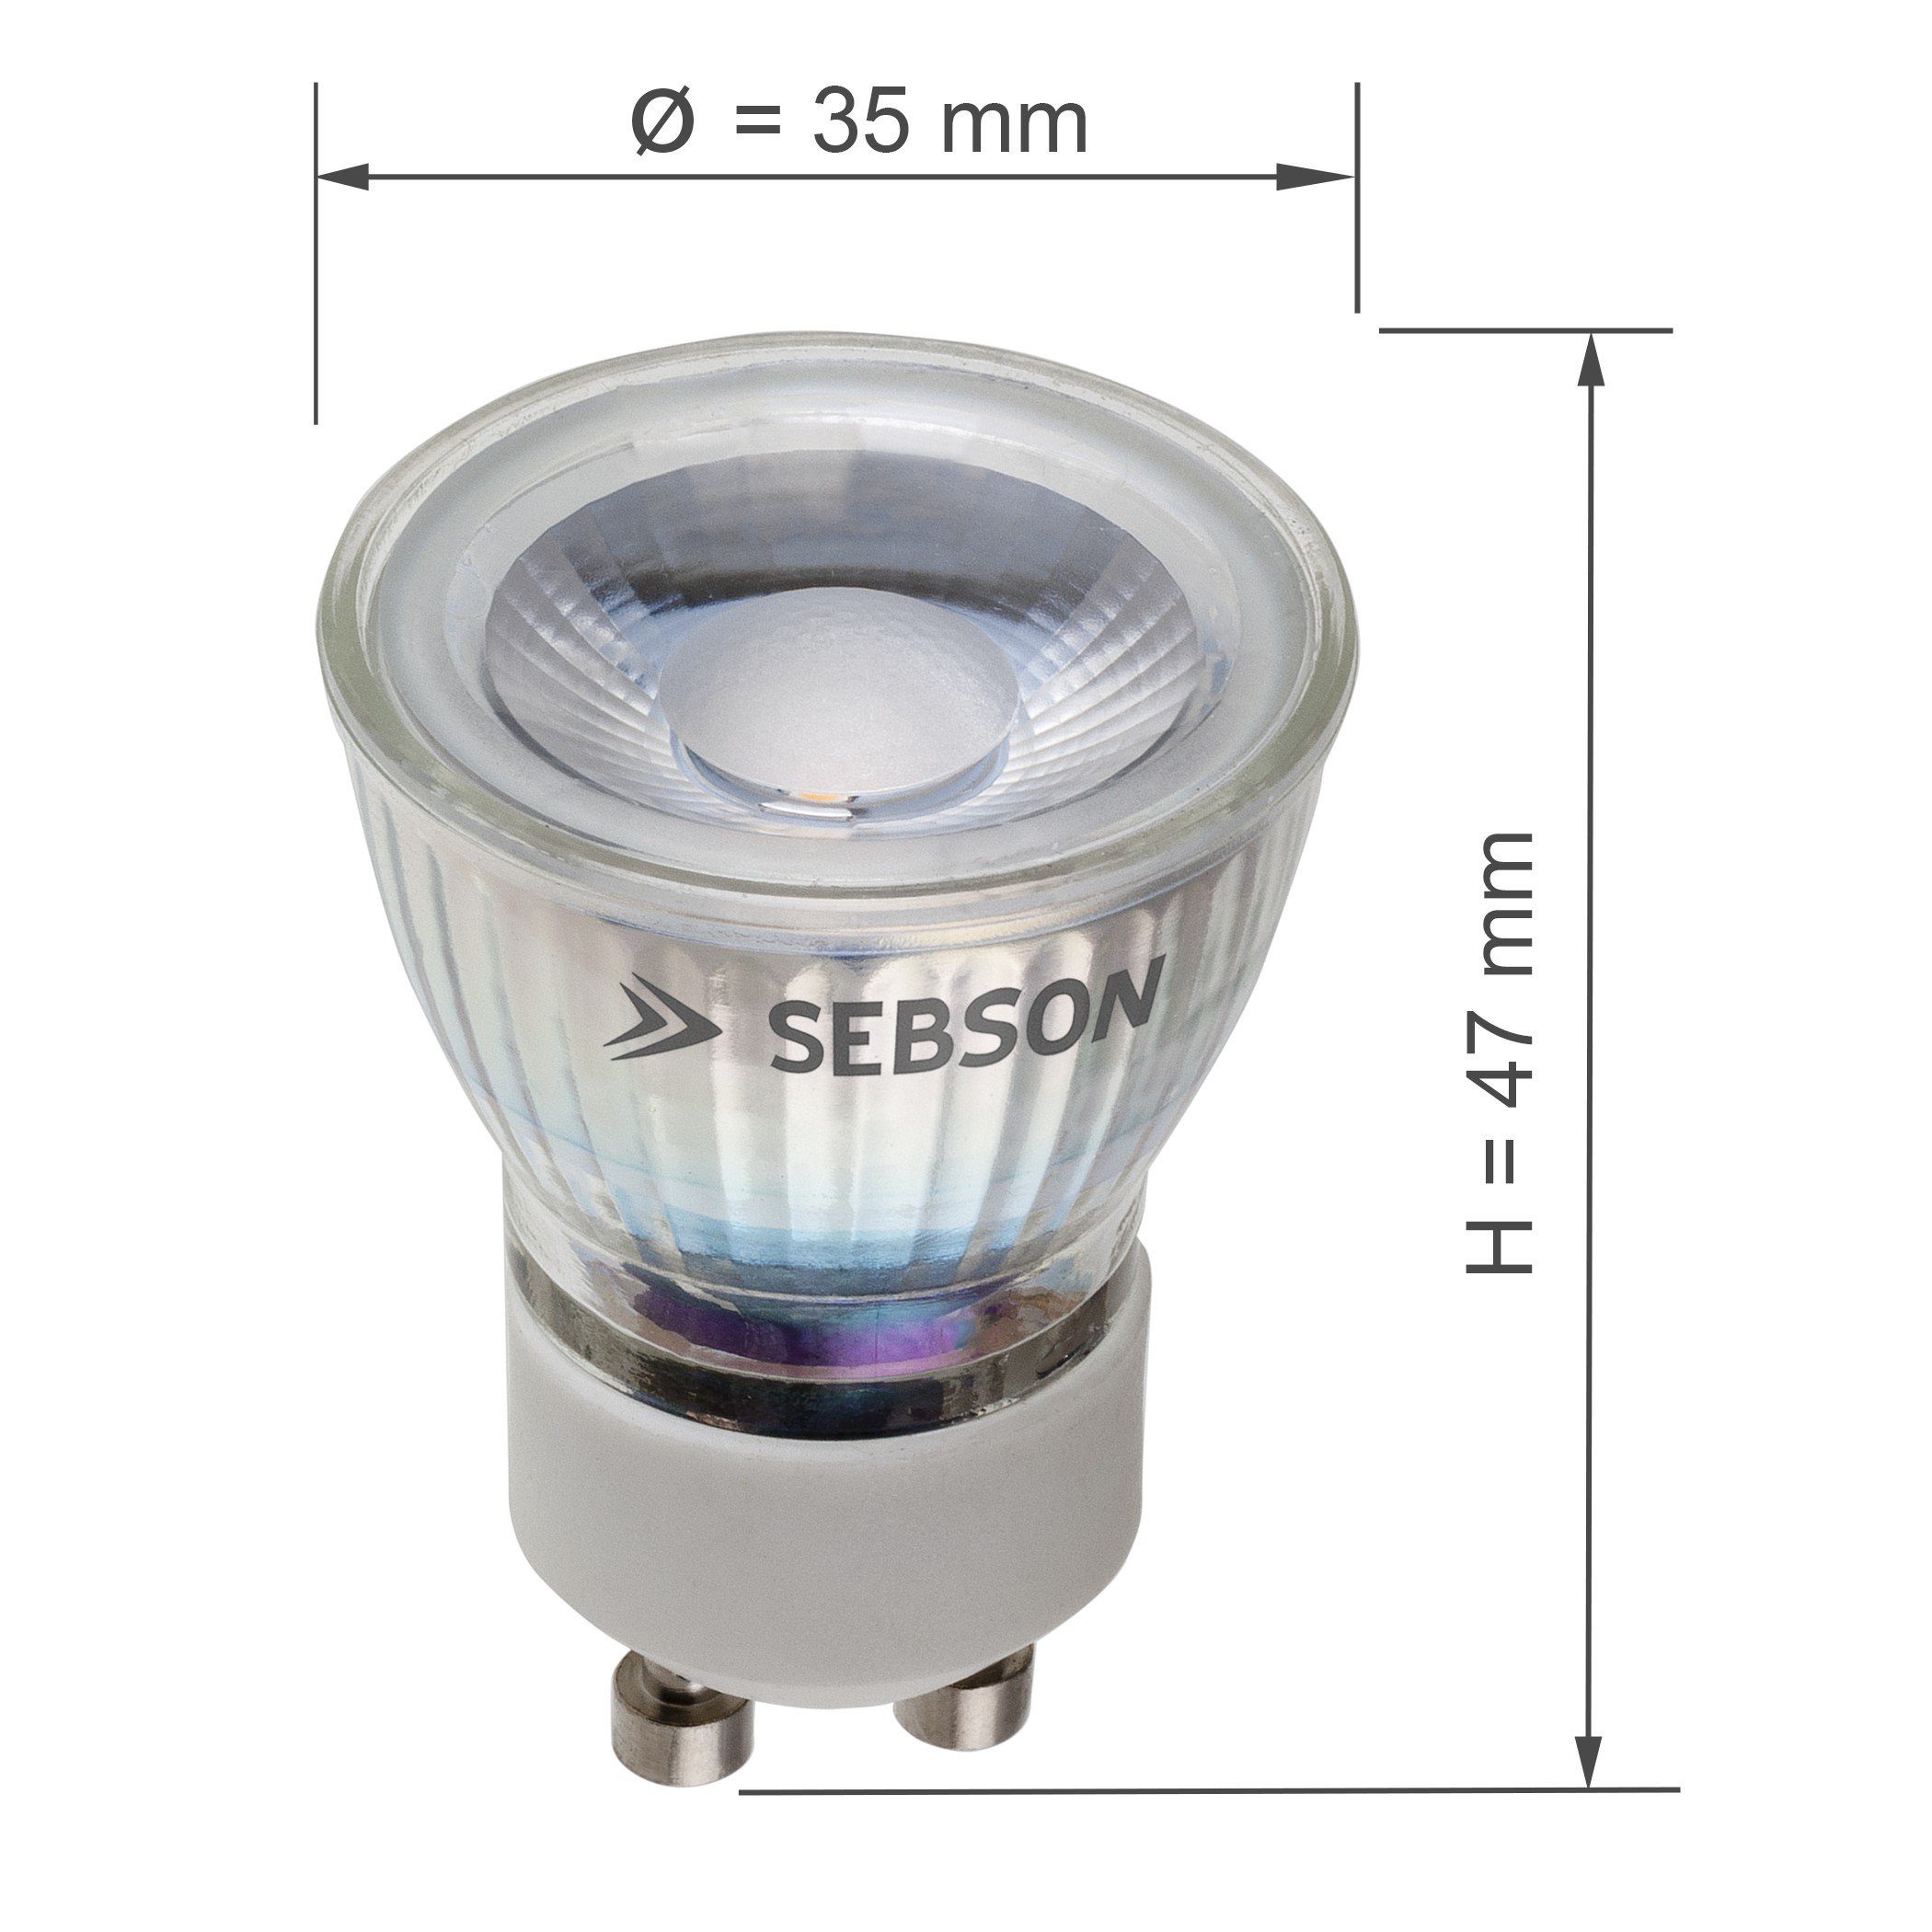 SEBSON LED-Leuchtmittel LED - 35mm Pack 3W 230V Lampe 4er Spot GU10 Durchmesser warmweiß